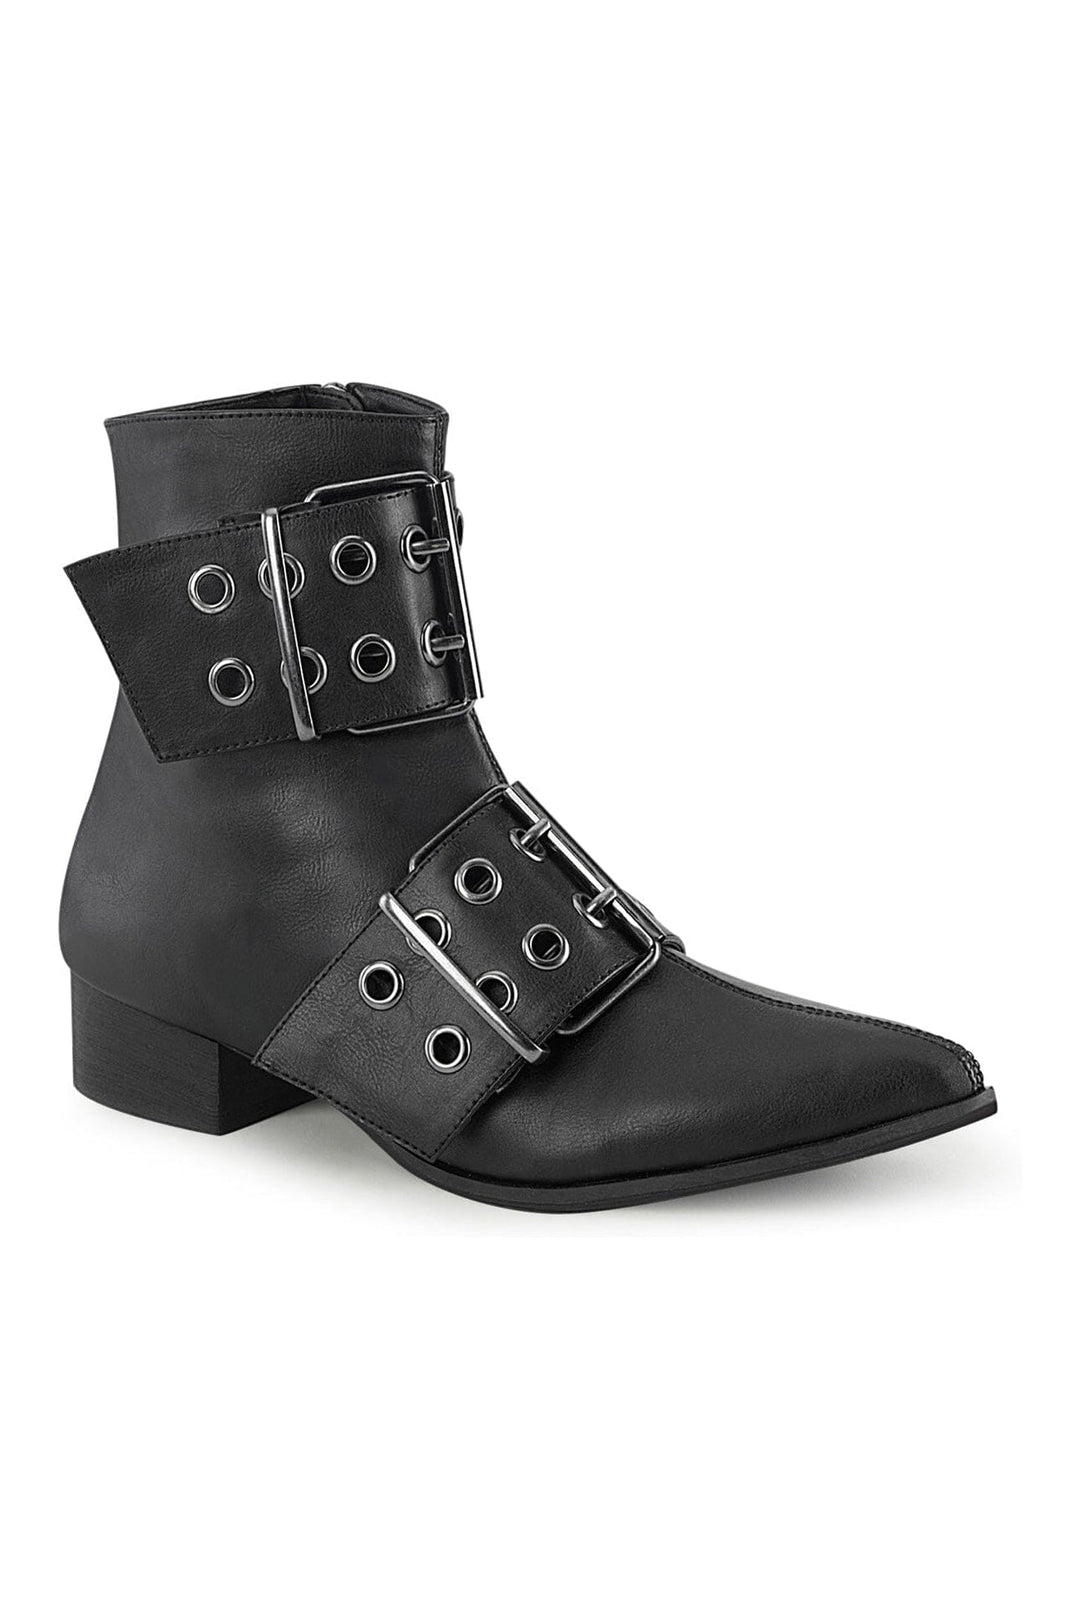 WARLOCK-55 Black Vegan Leather Ankle Boot-Ankle Boots-Demonia-Black-10-Vegan Leather-SEXYSHOES.COM